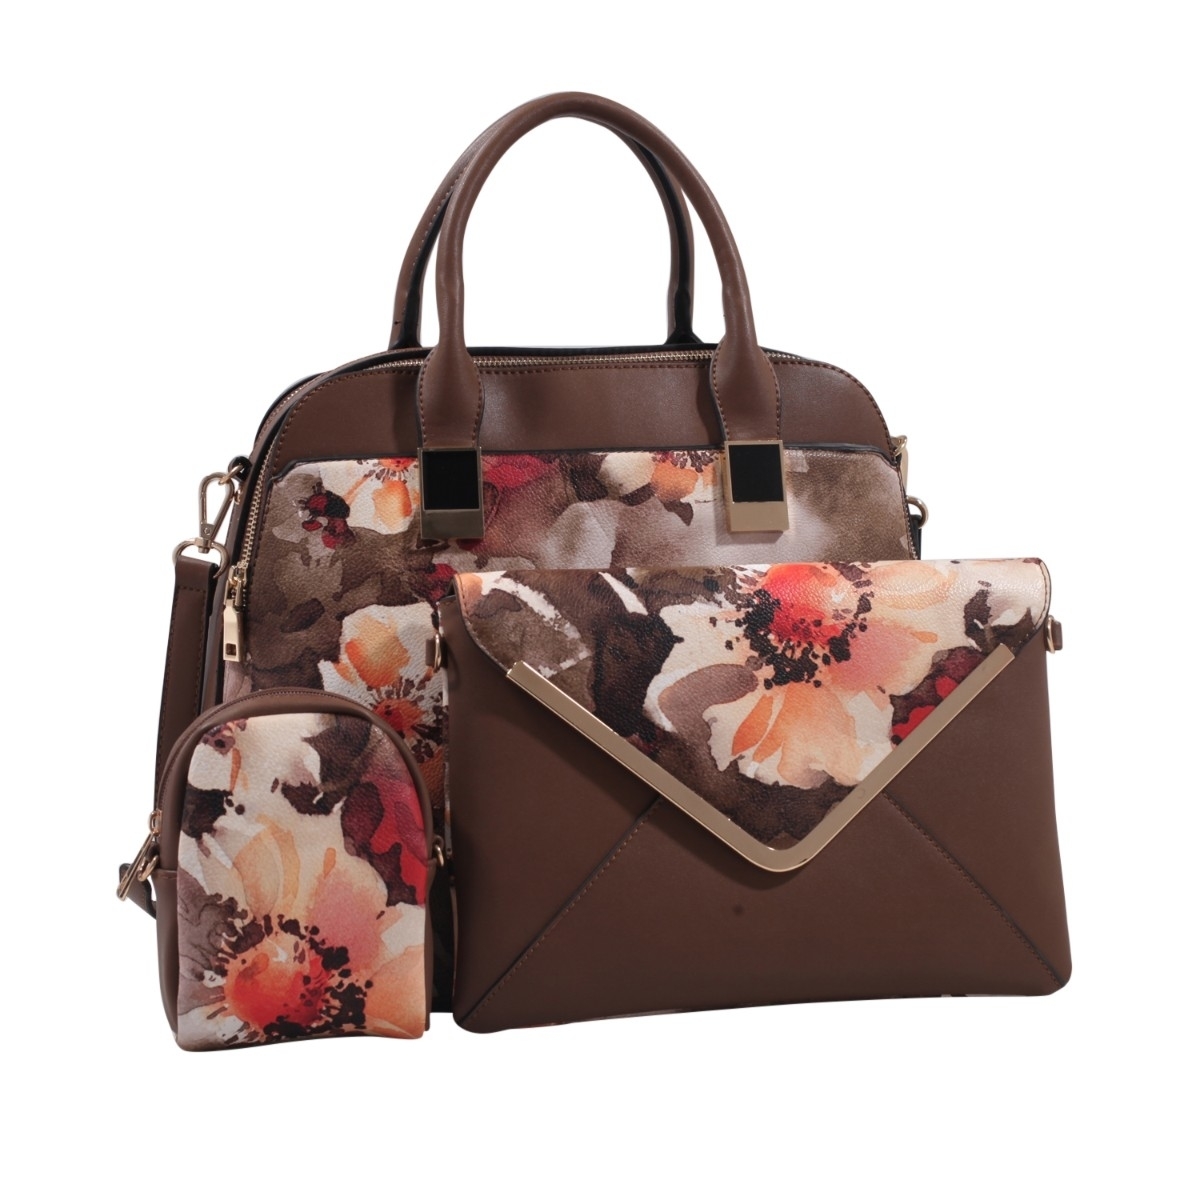 MKF Collection 3-1 Dresden Satchel Handbag By Mia K. - Green